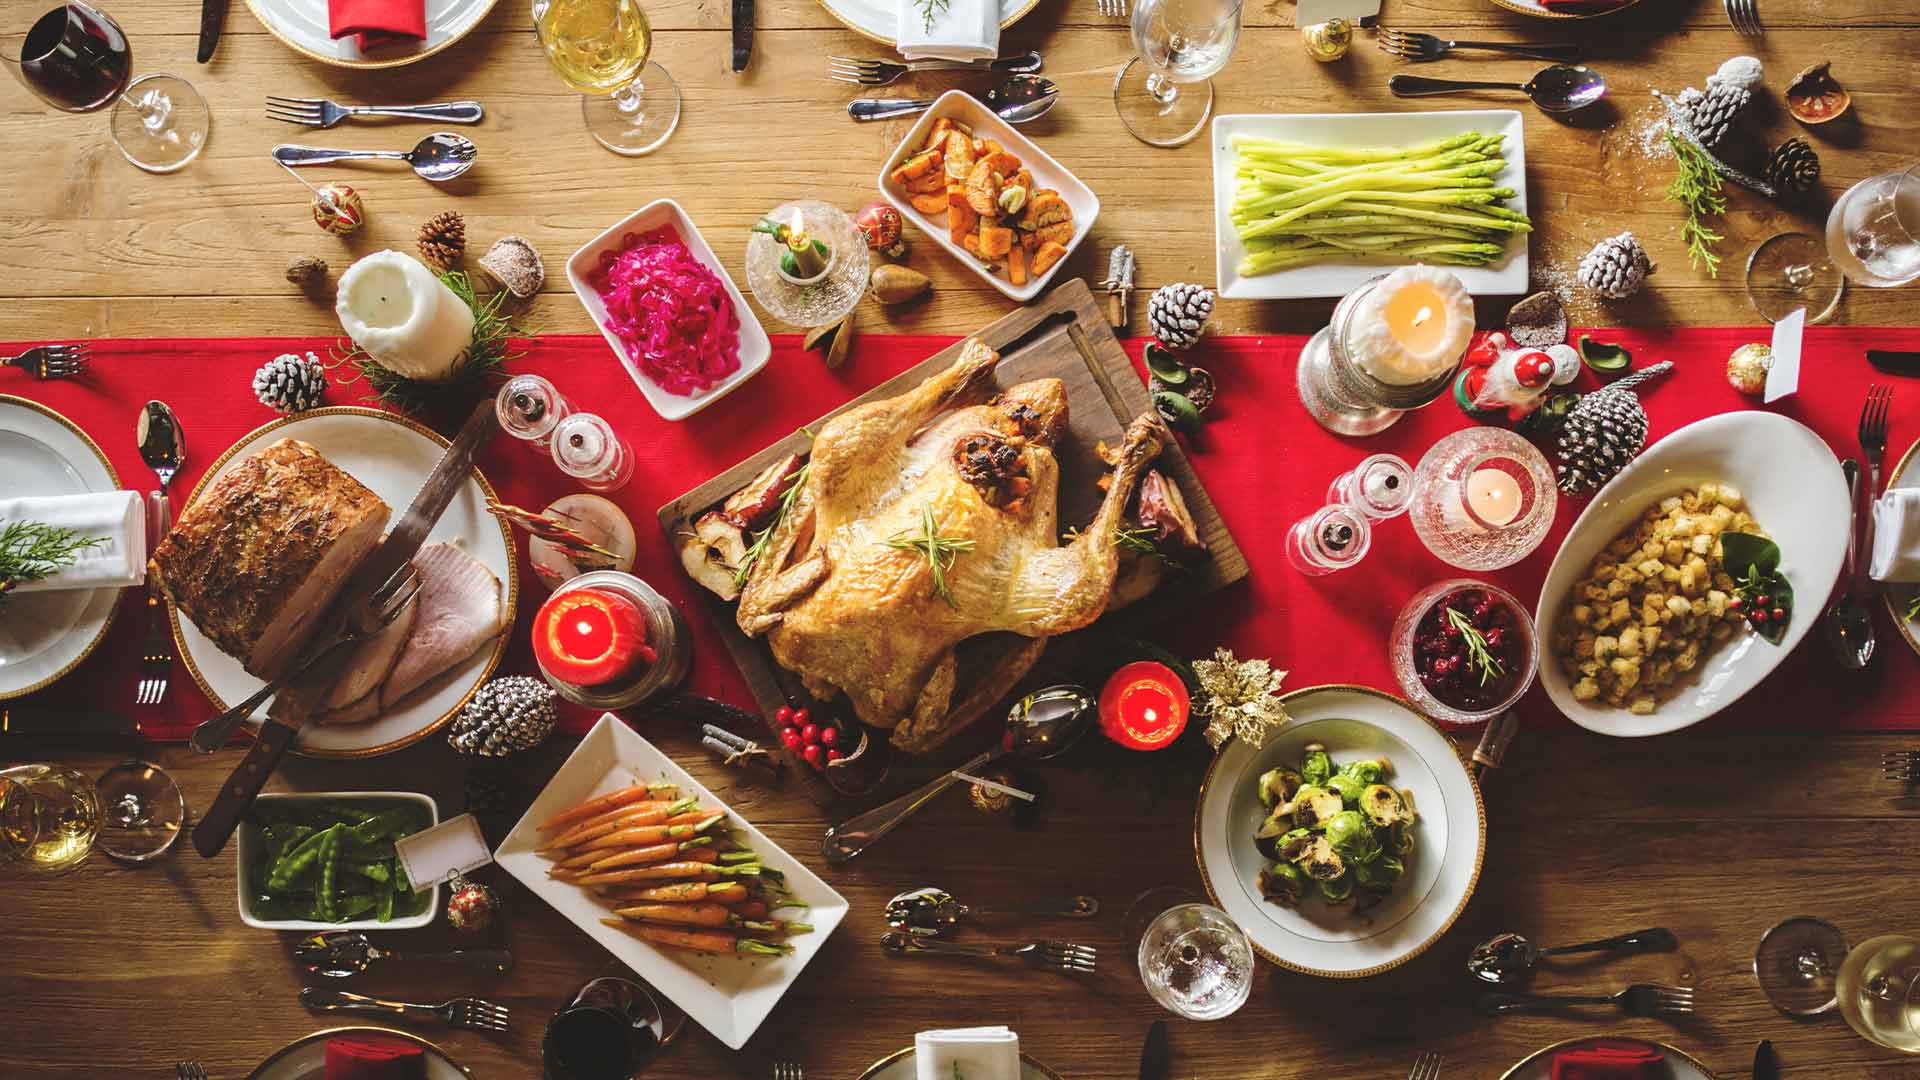 A Christmas feast with wine, roasted turkey and Sunday roast